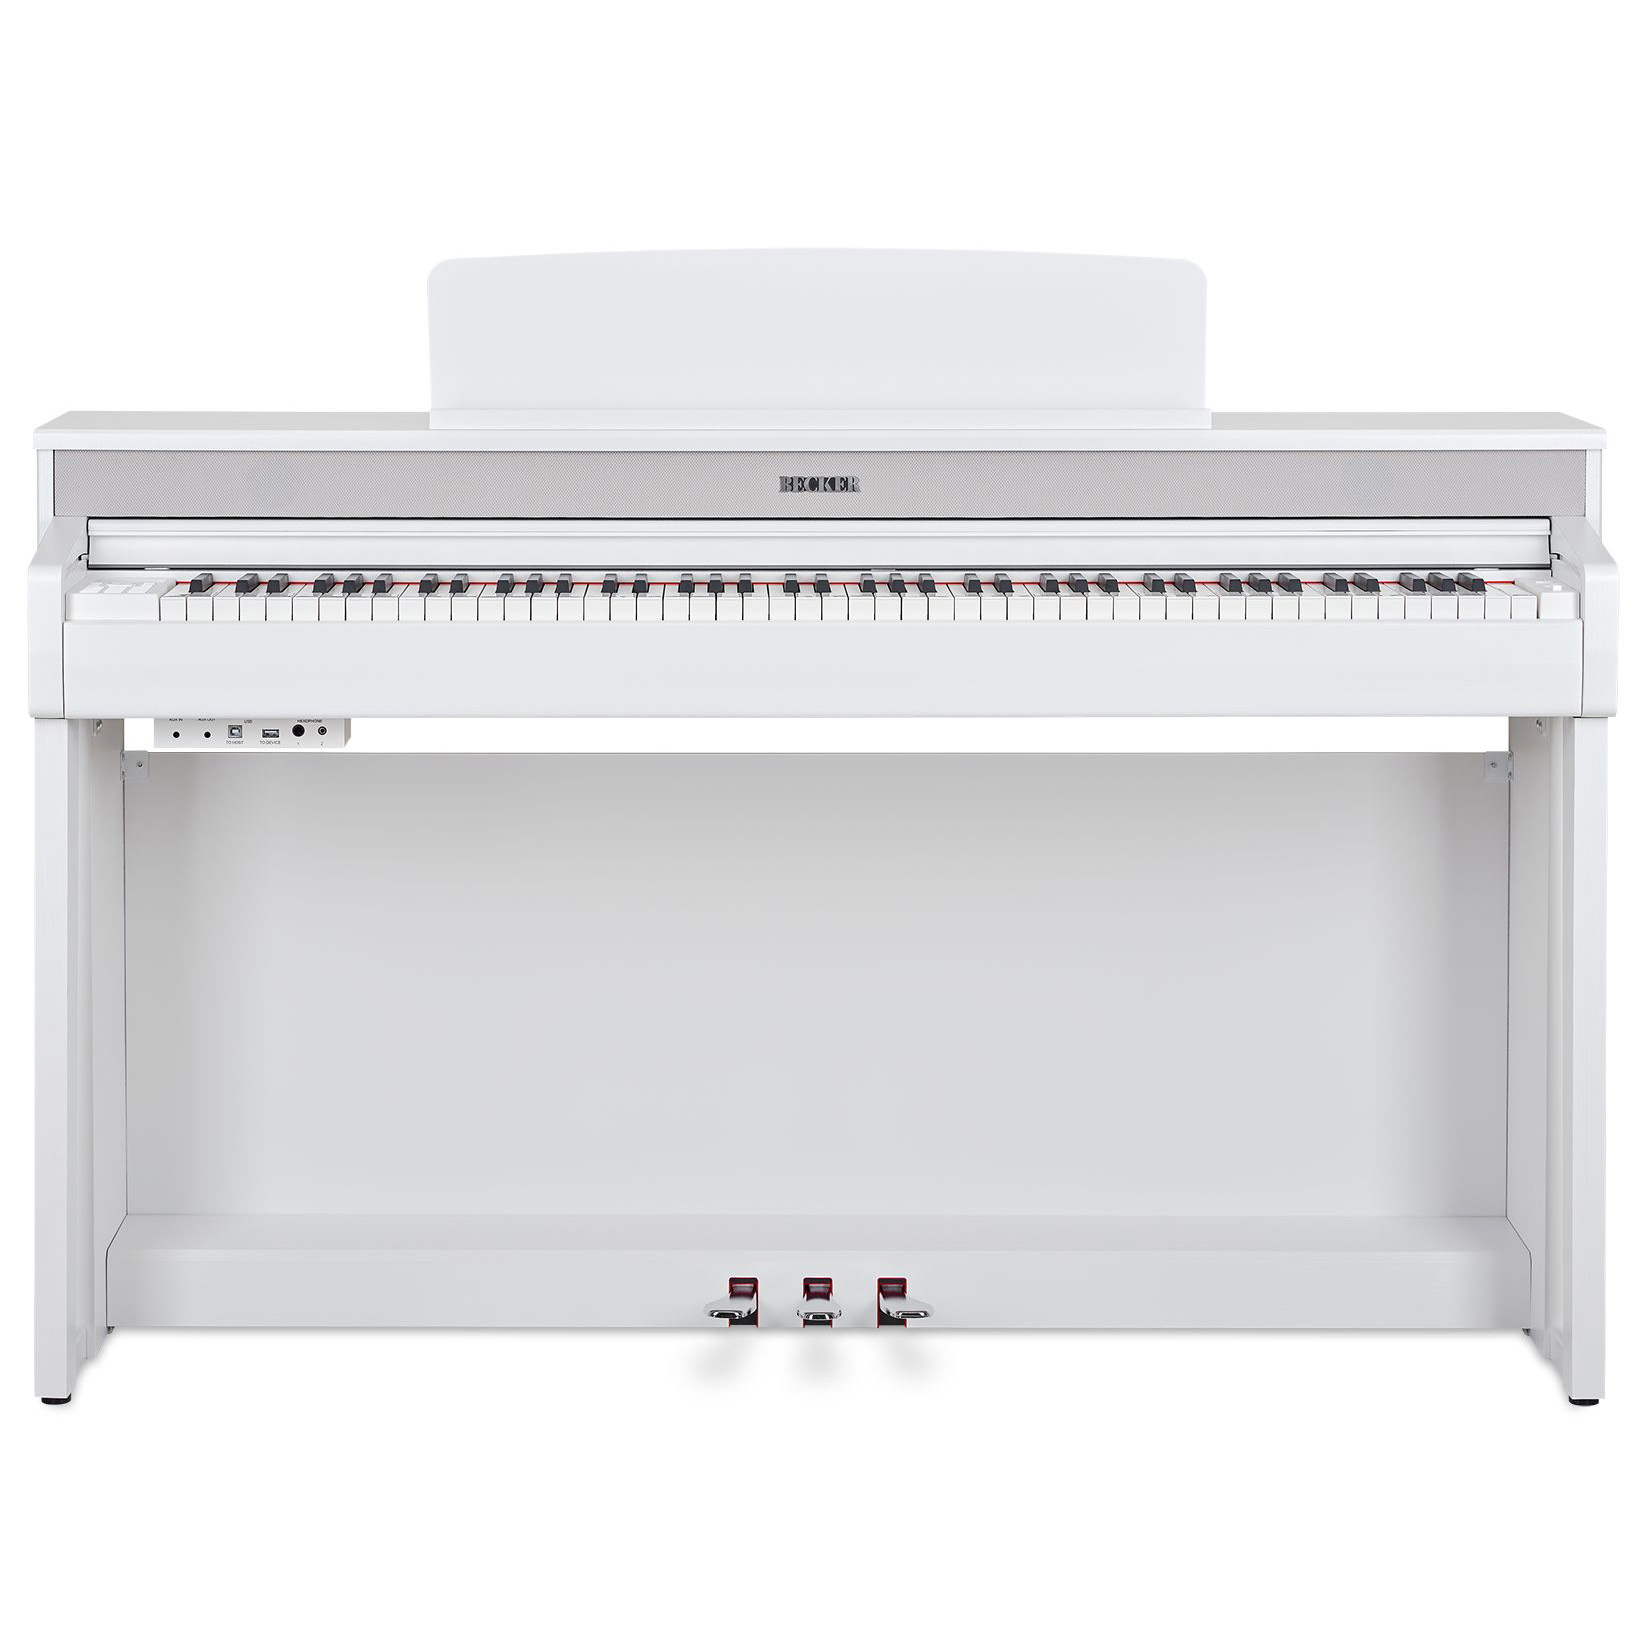 Becker BAP-62W Цифровые пианино